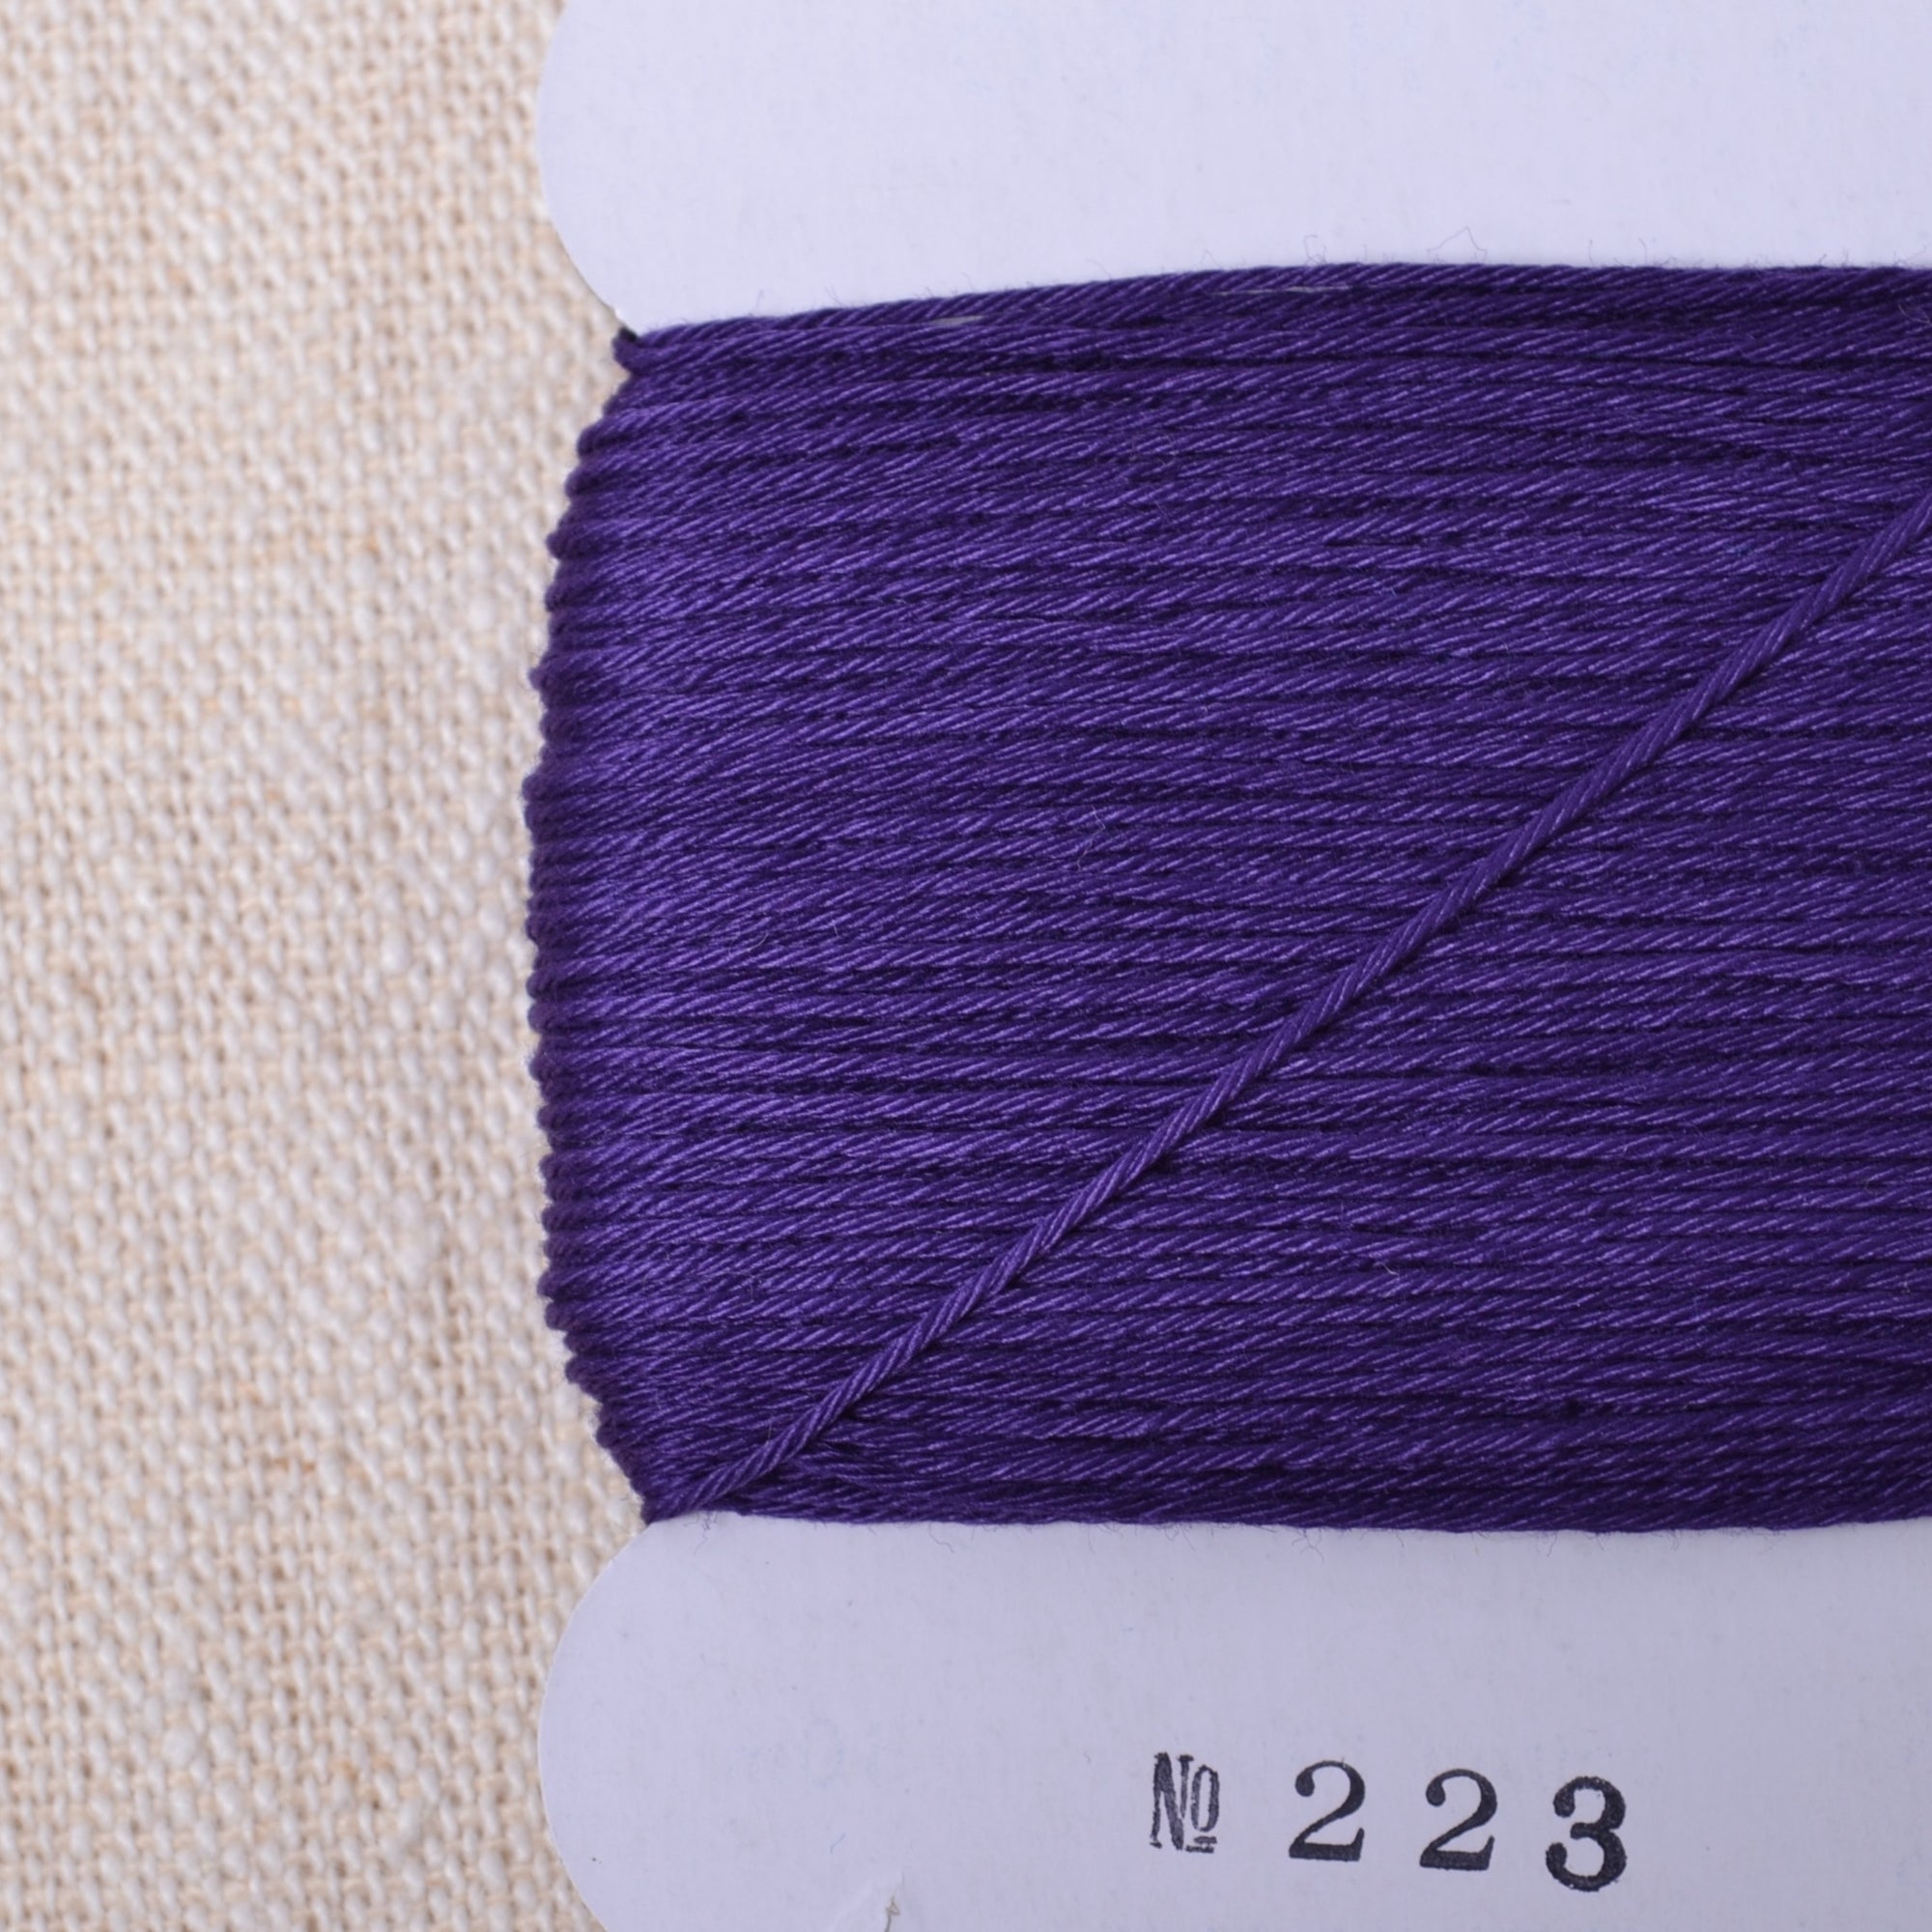 Daruma cotton thread